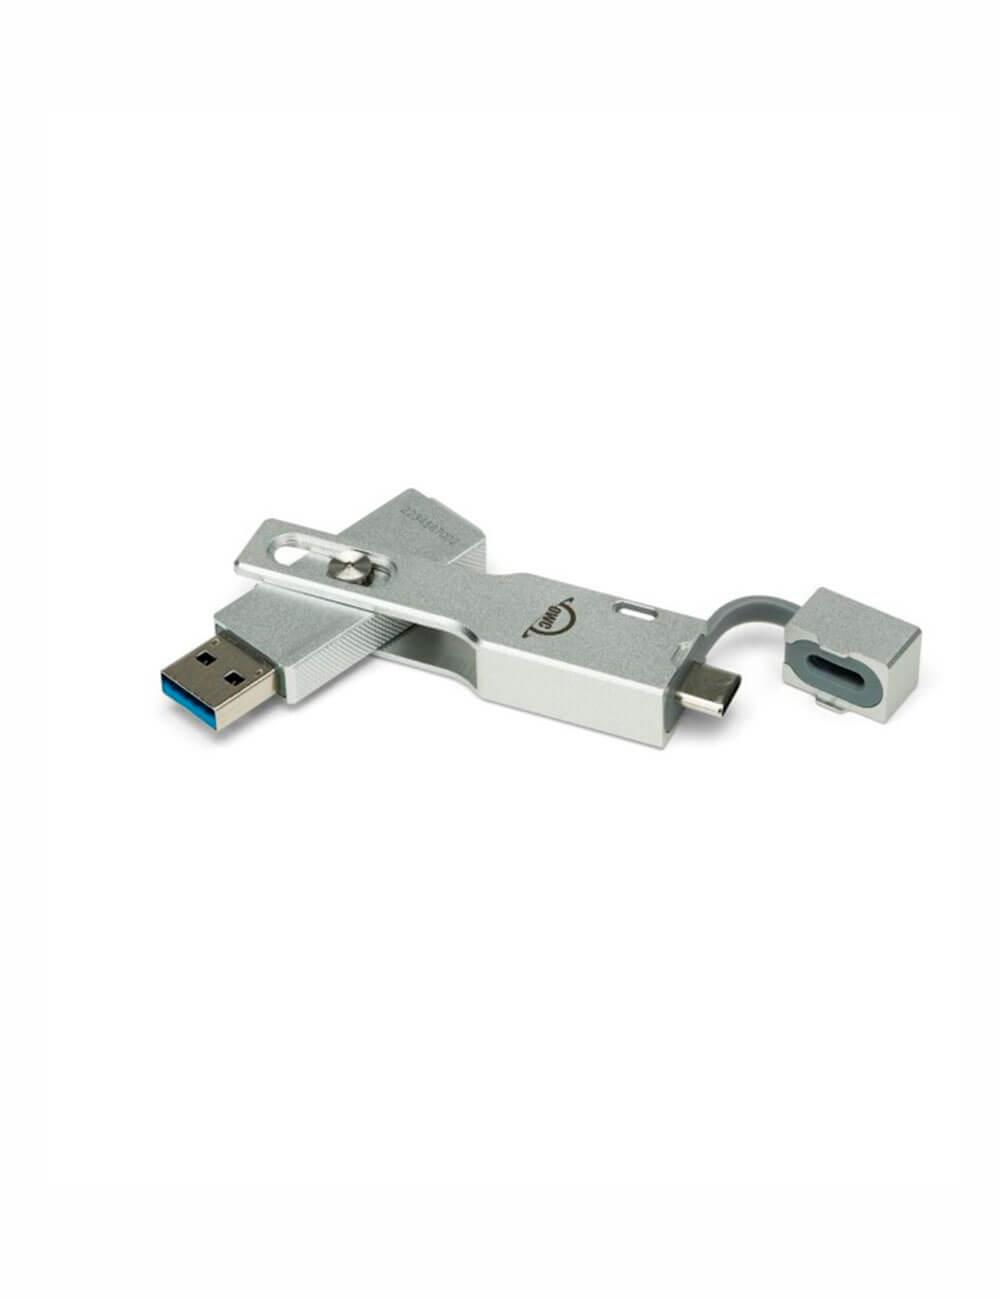 OWC Envoy Pro mini USB-C + USB-A (10Gb/s) Portable SSD 250GB